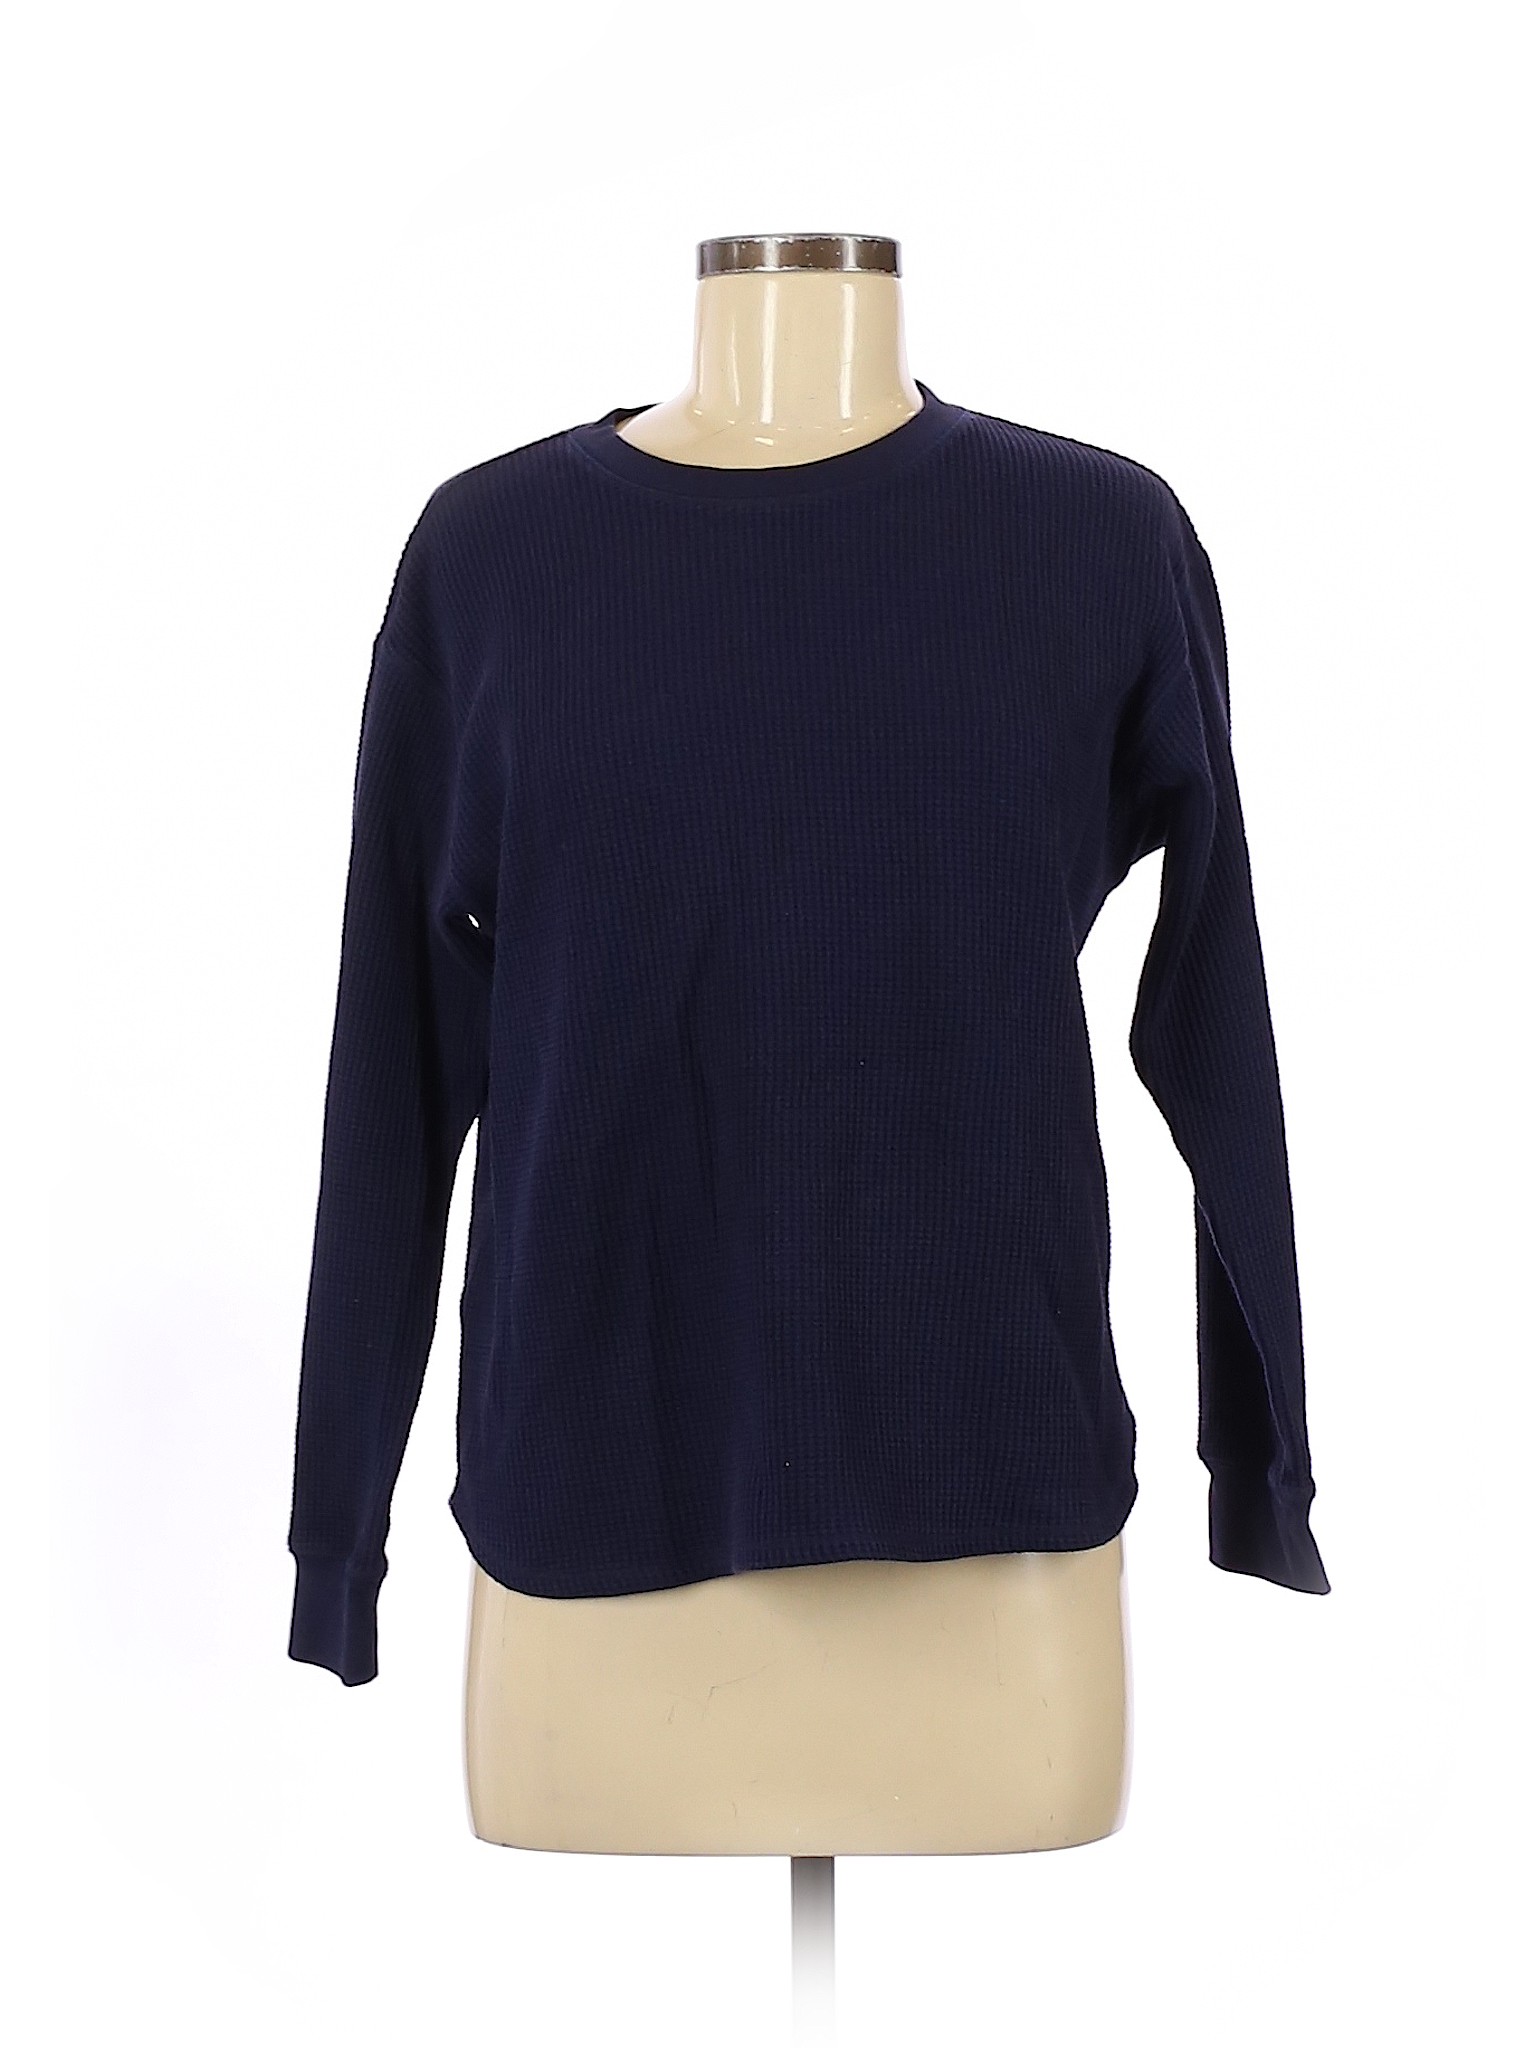 Uniqlo Women Blue Sweatshirt M | eBay